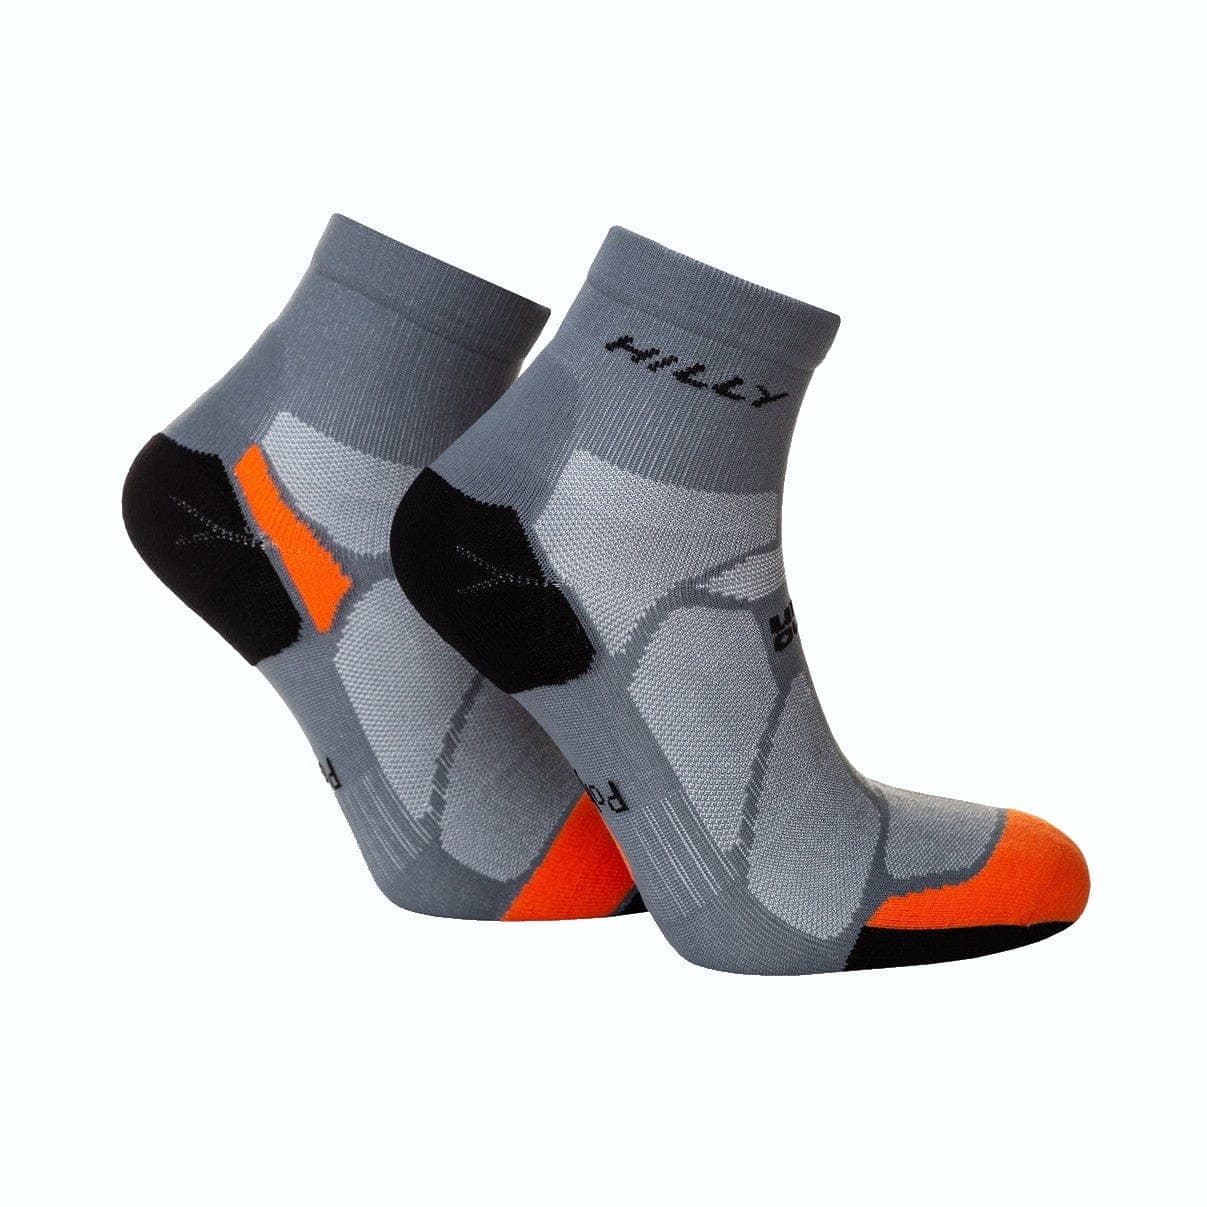 Hilly Marathon Fresh Anklet Min - Granite/Orange